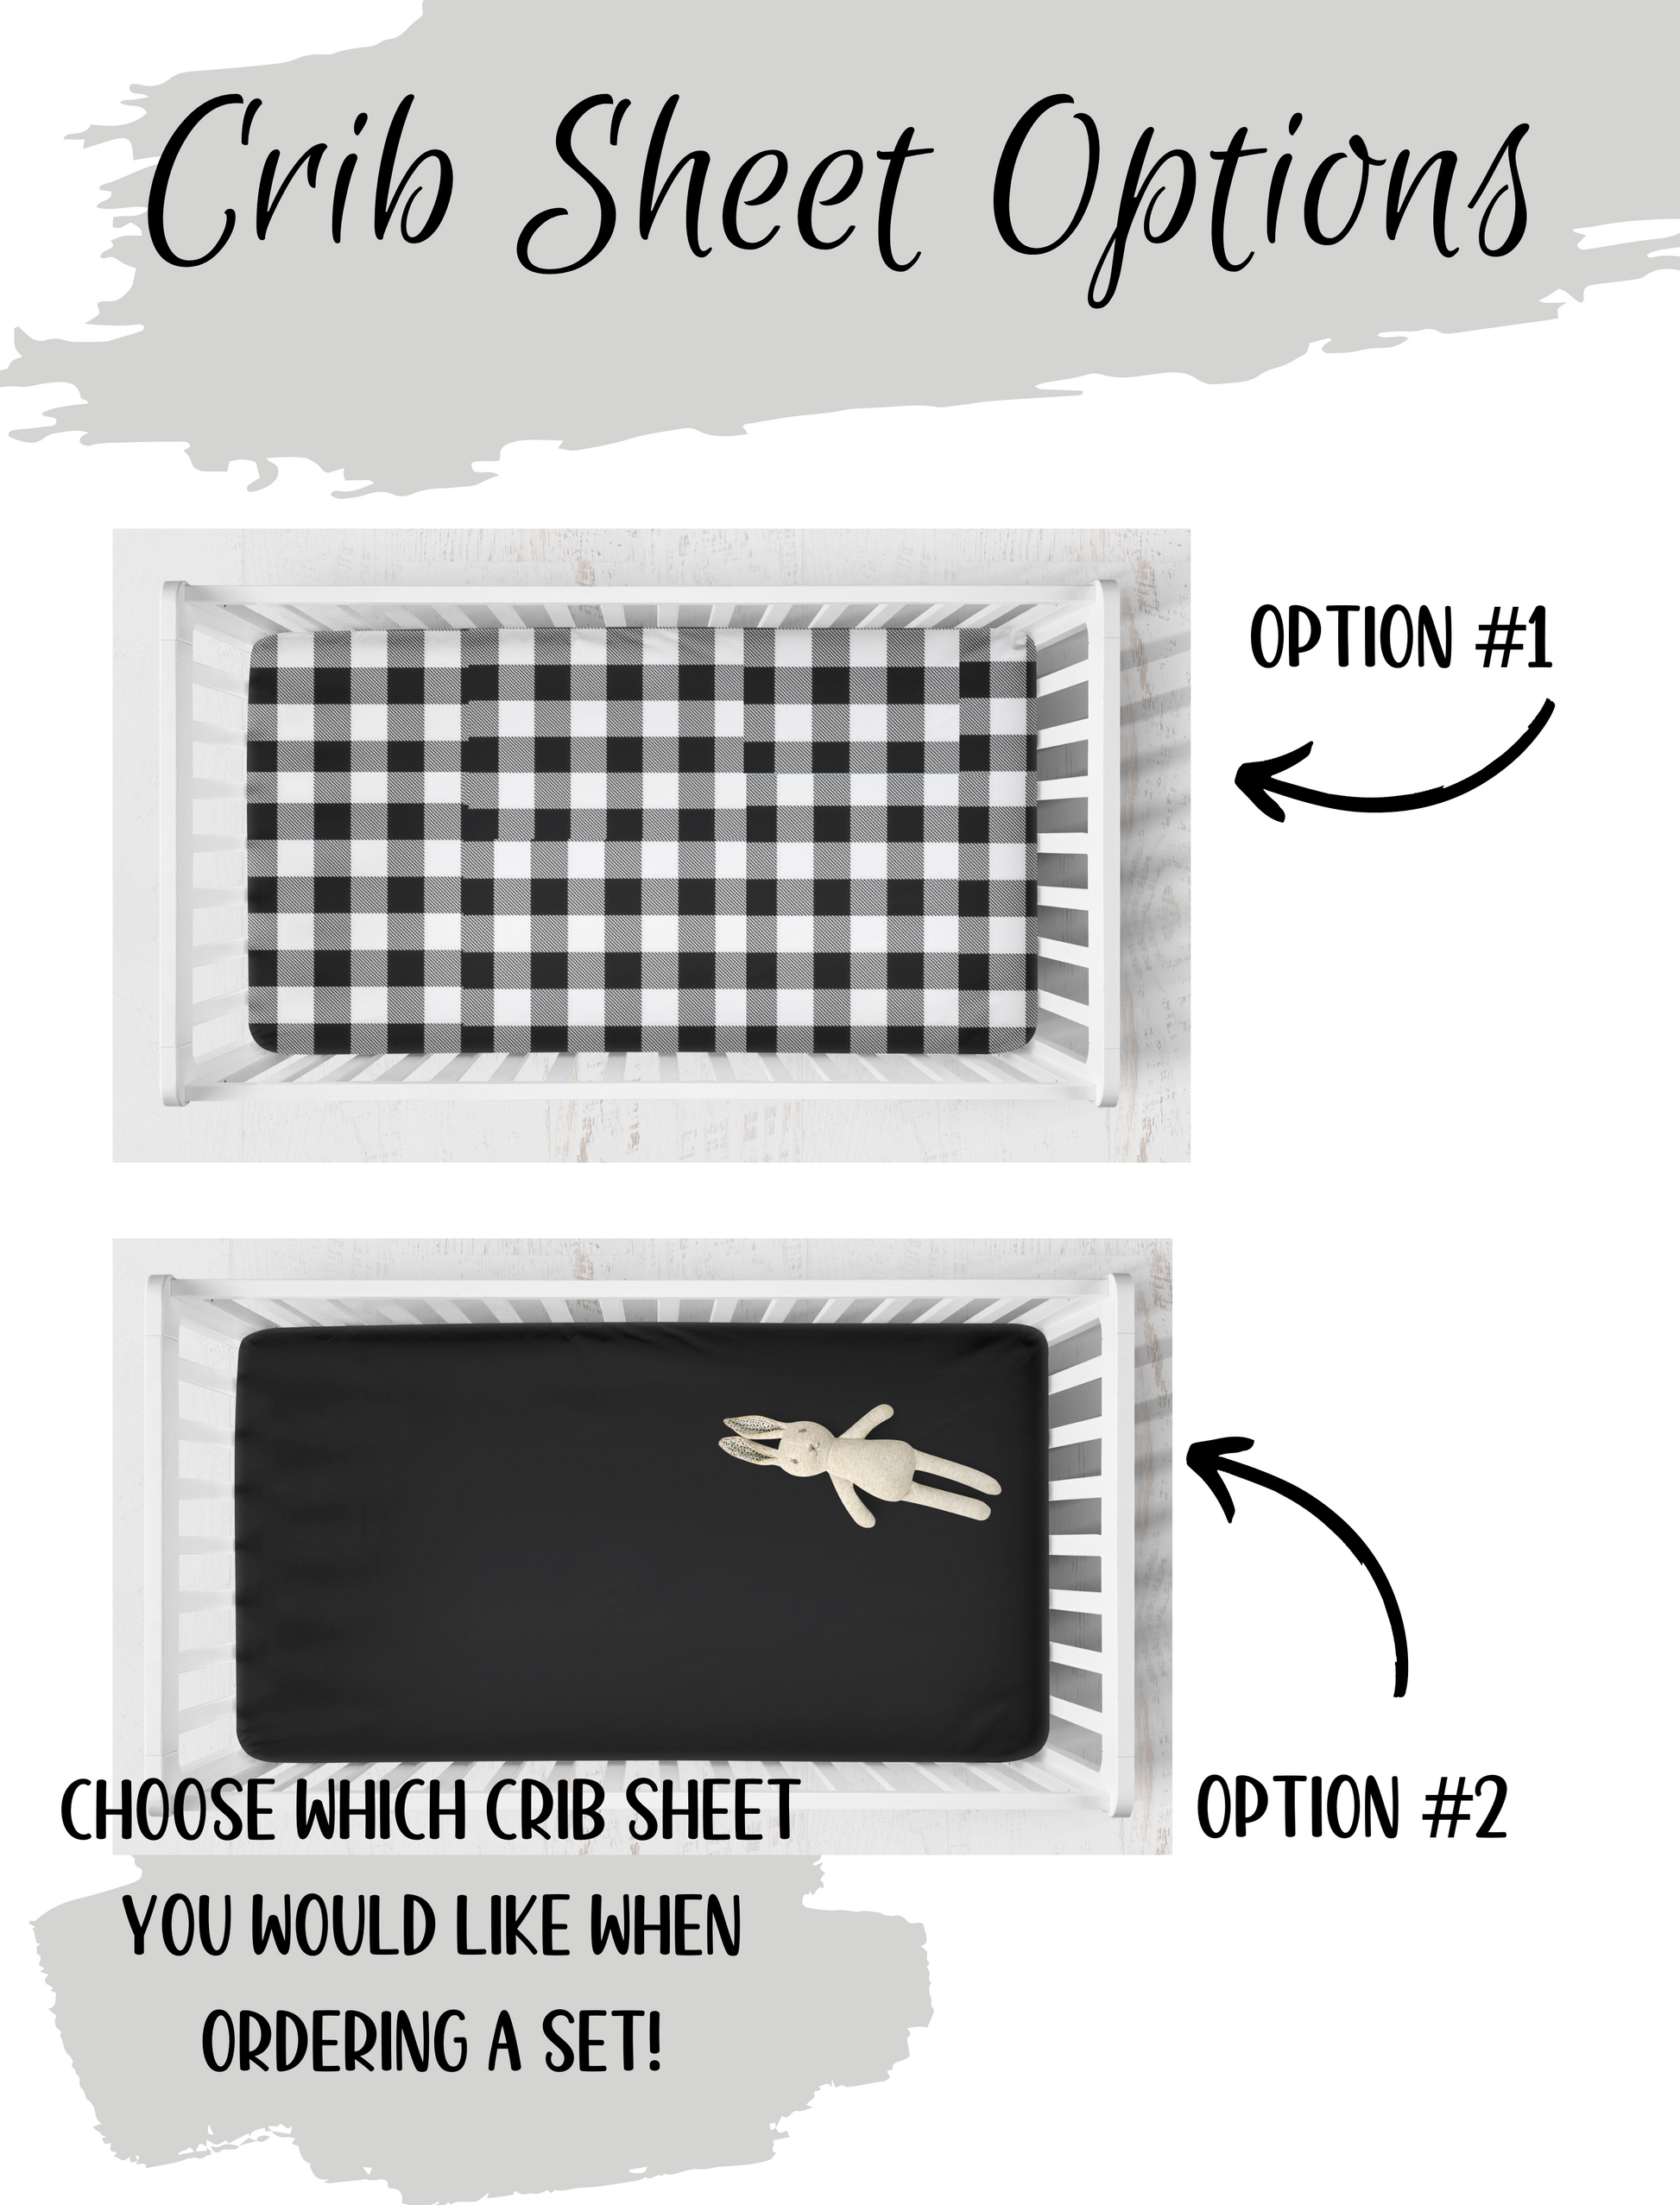 pick your crib sheet - black gingham crib sheet or black crib sheet